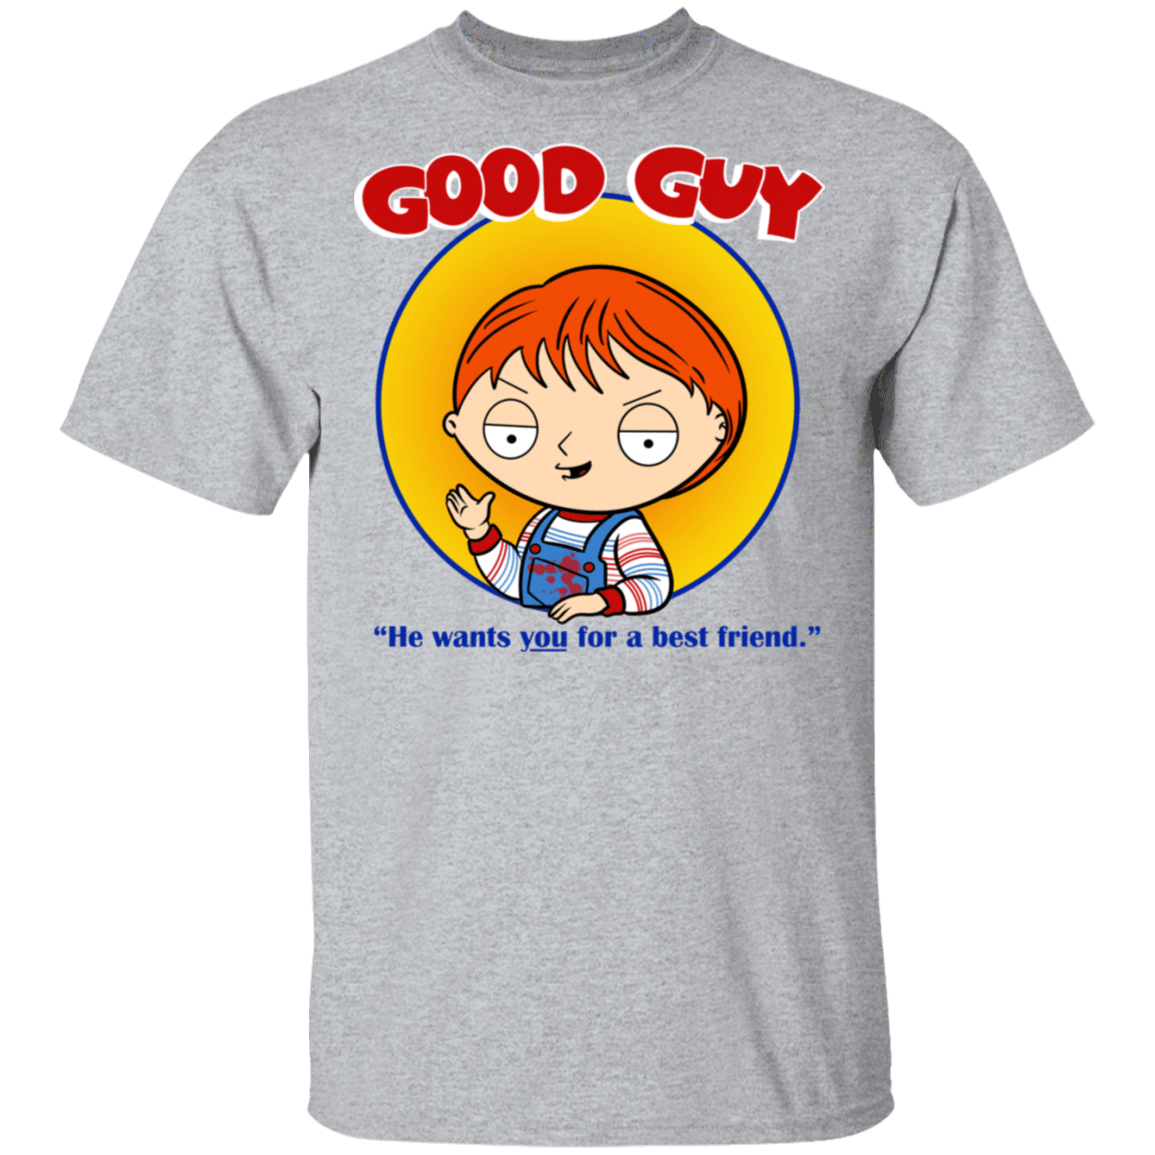 T-Shirts Sport Grey / S Good Guy T-Shirt